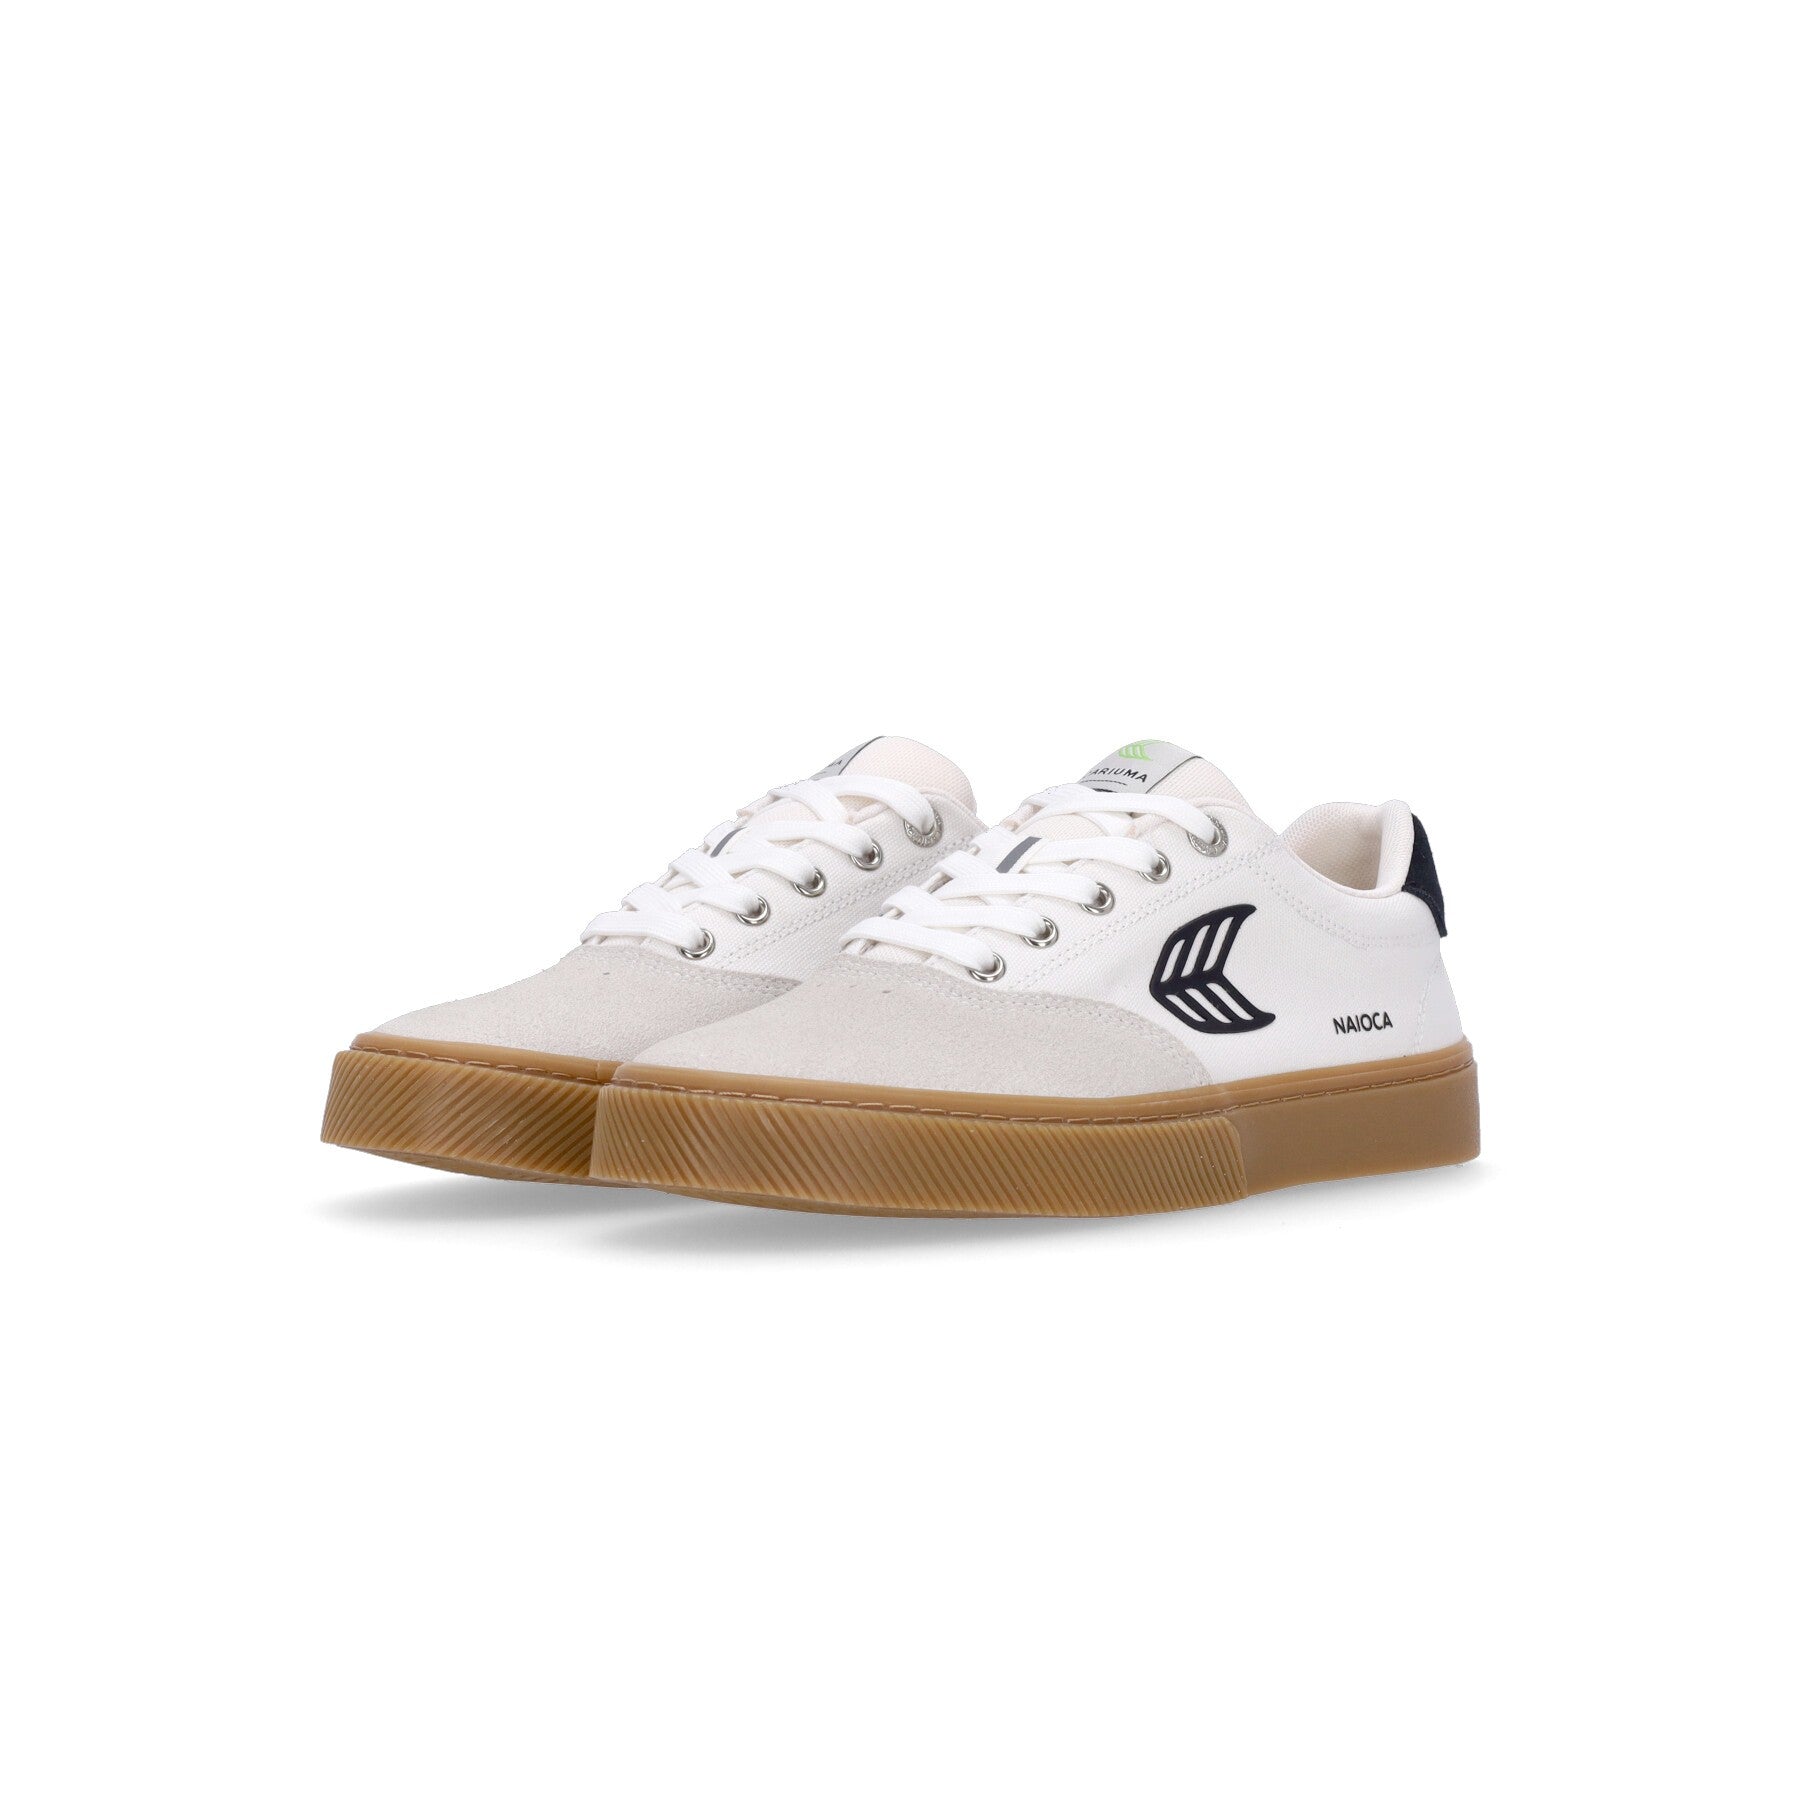 Naioca Men's Skate Shoes Gum/vintage White